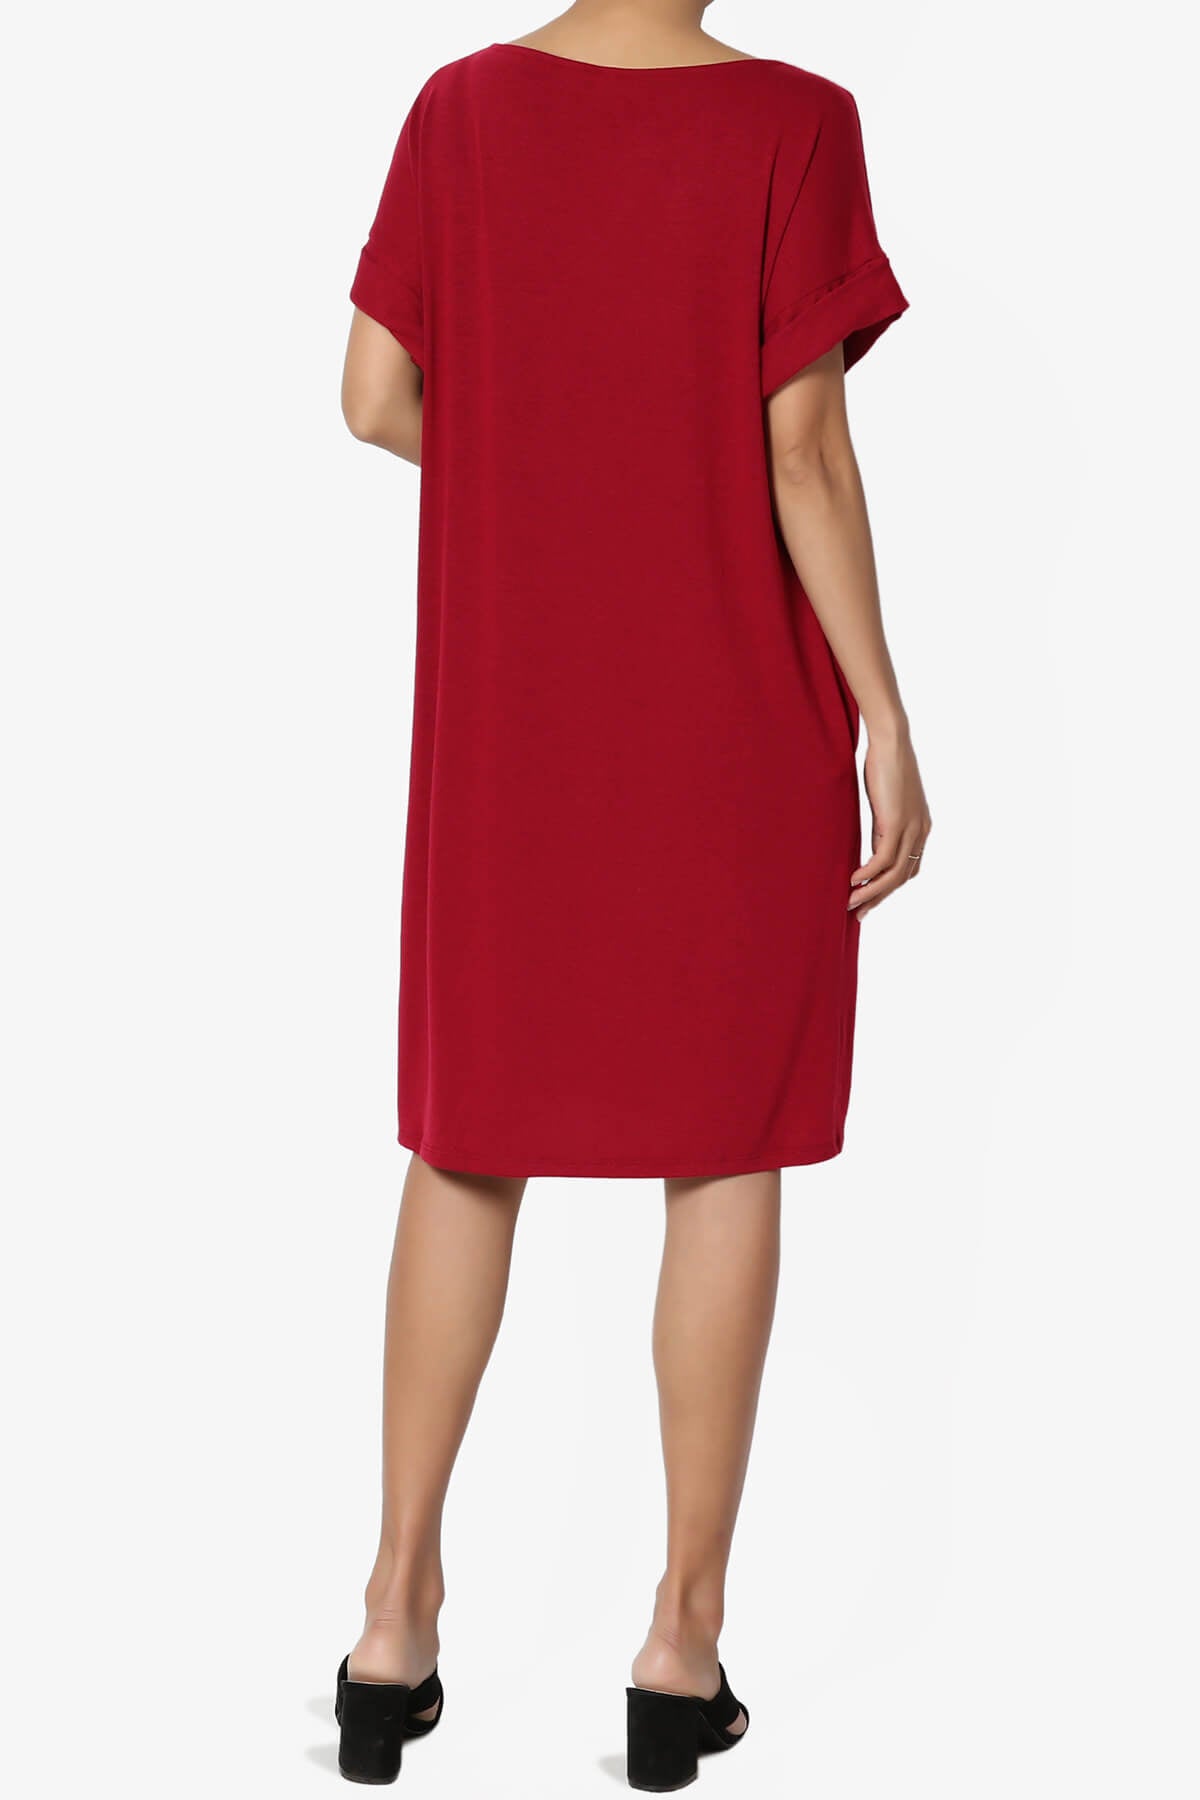 Load image into Gallery viewer, Janie Rolled Short Sleeve Round Neck Dress DARK RED_2
